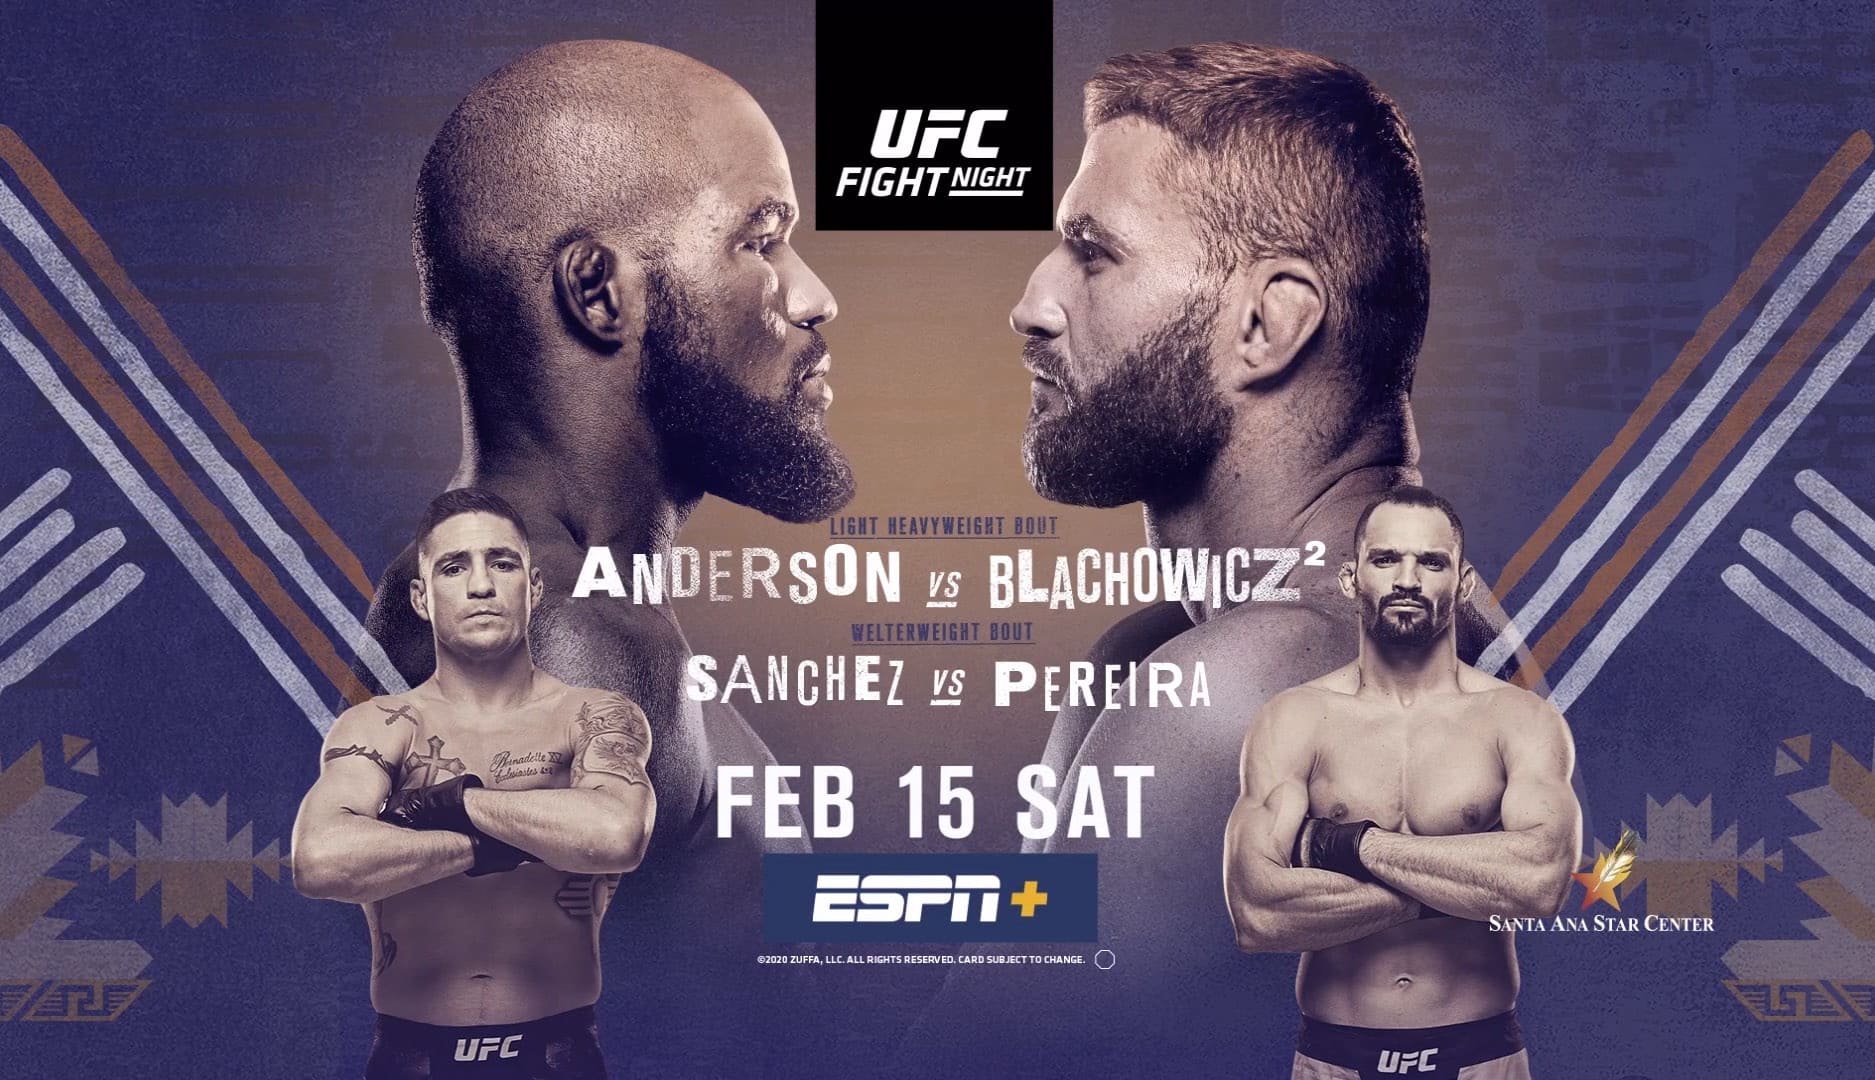 UFC Fight Night 167: Андерсон - Блахович 2 дата проведения, кард, участники и результаты